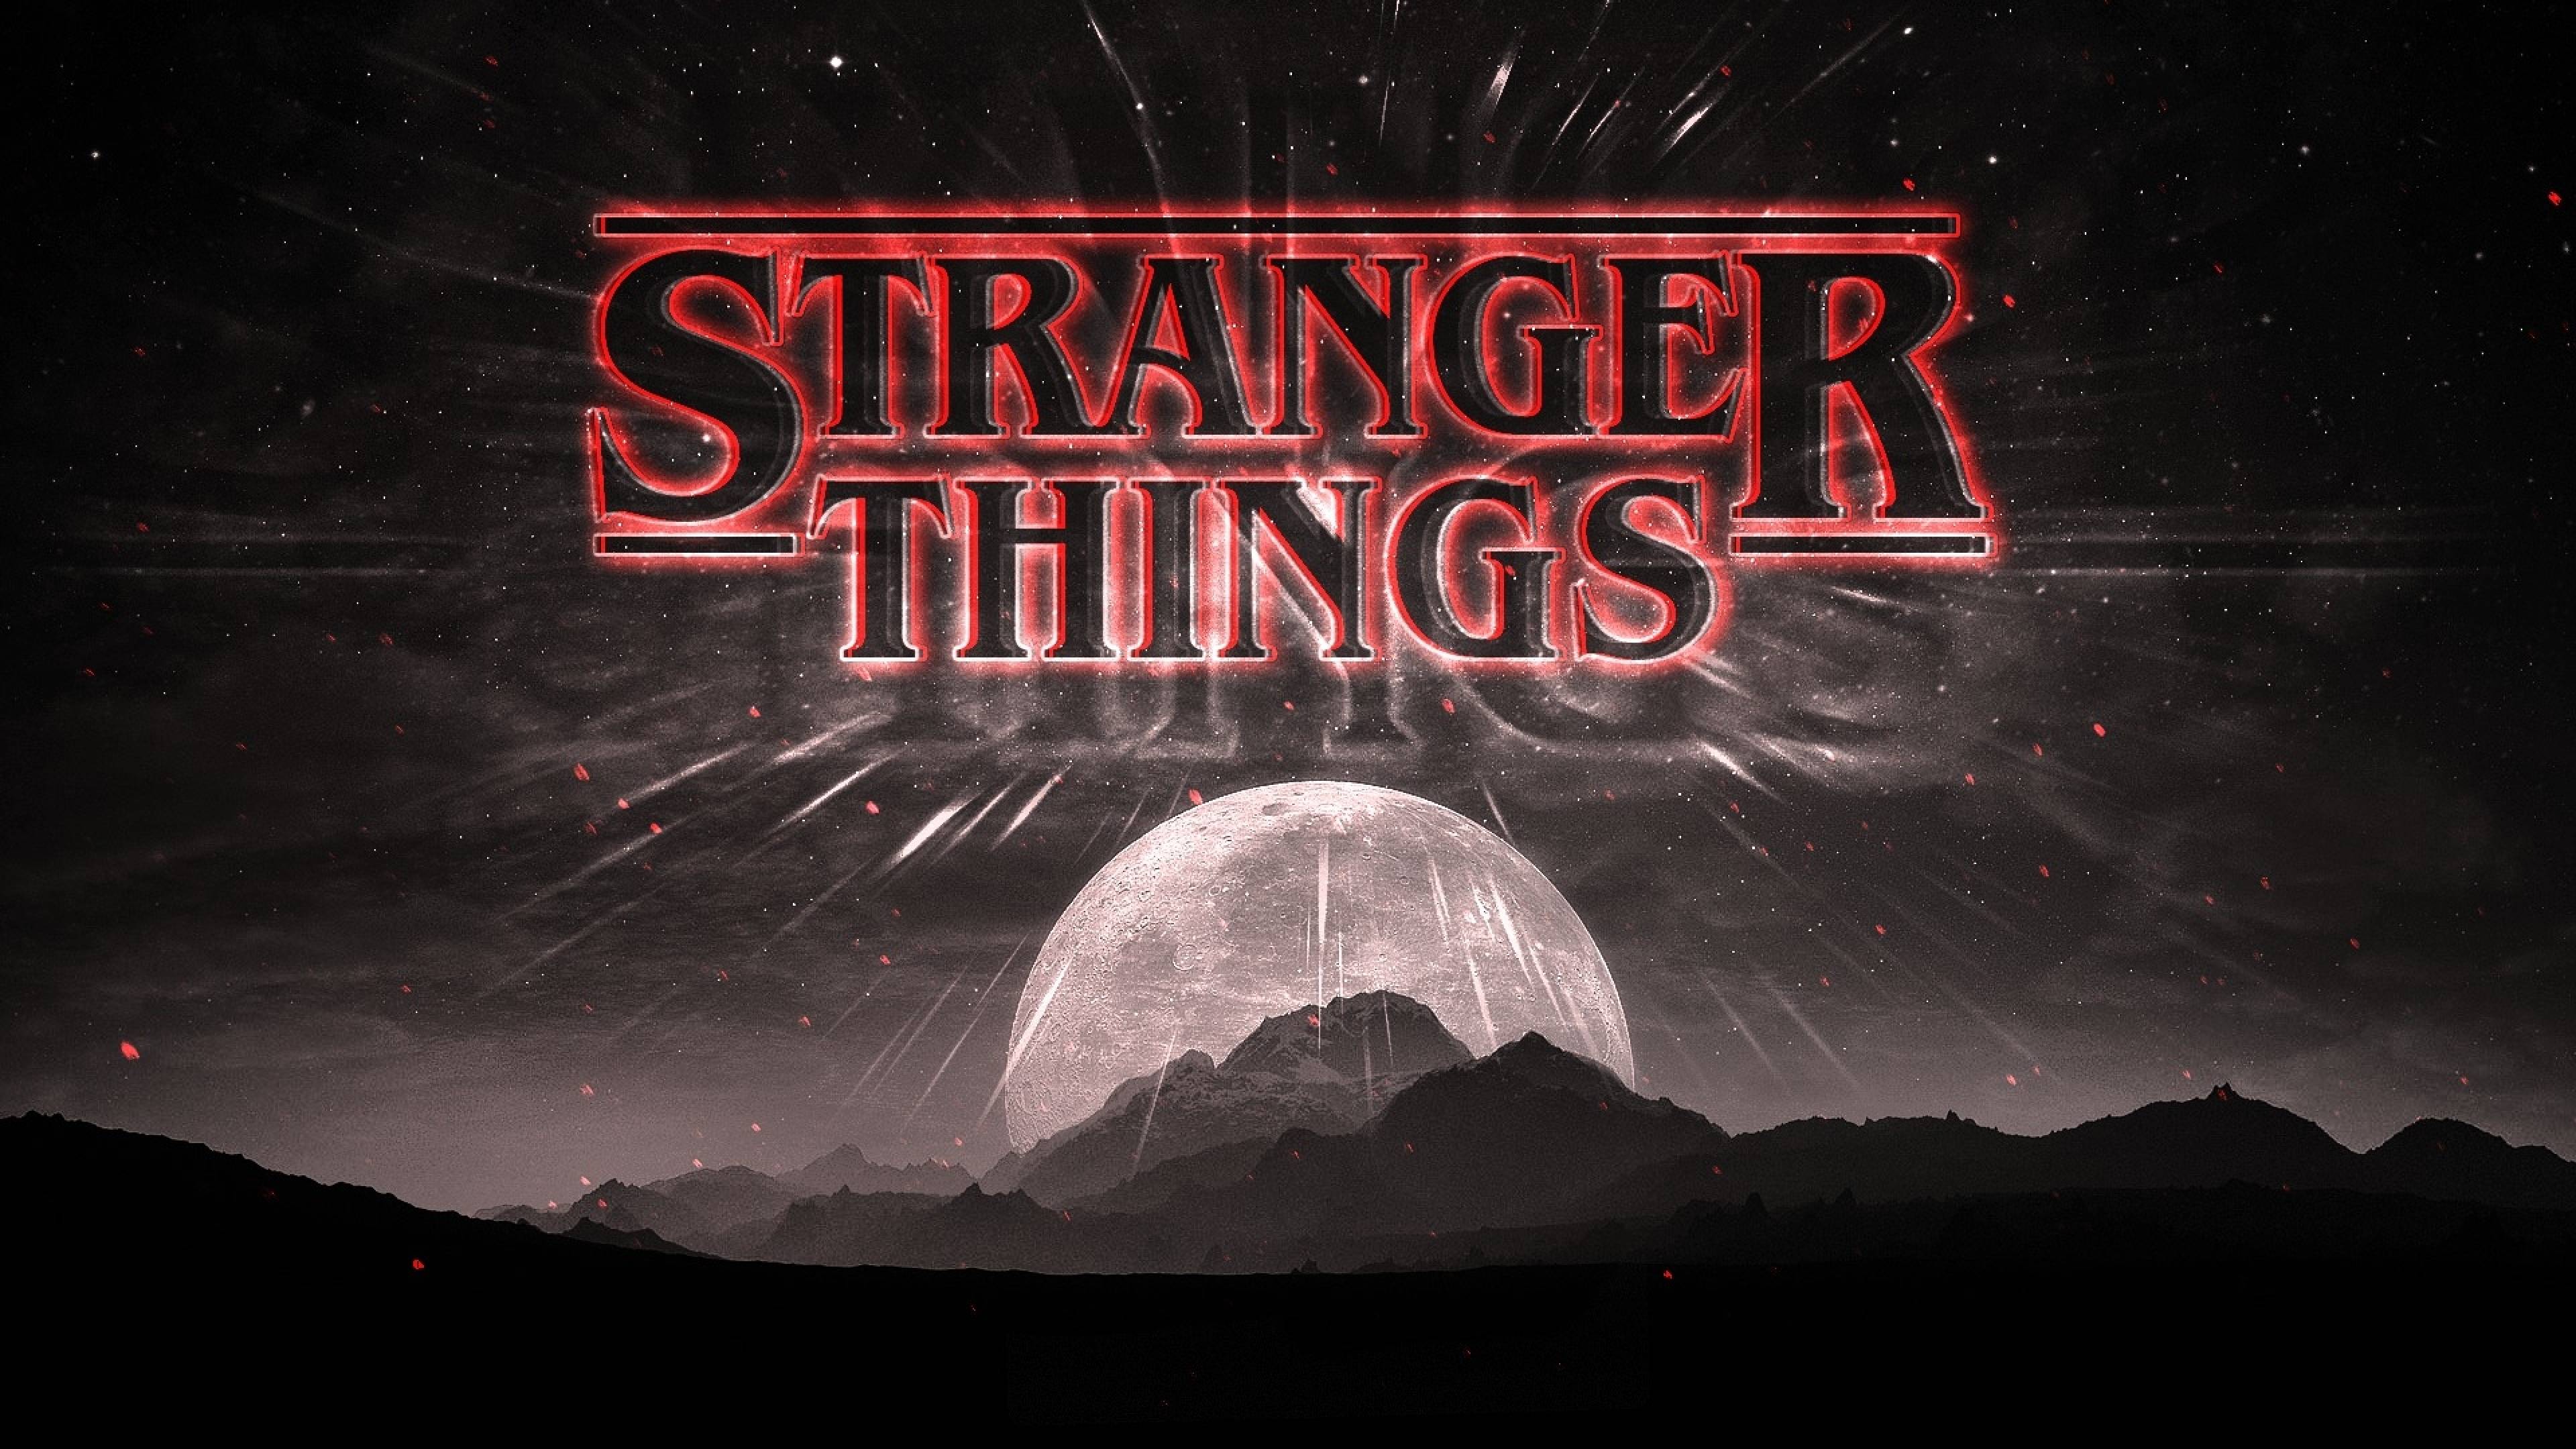 A poster for the movie stranger things - Stranger Things